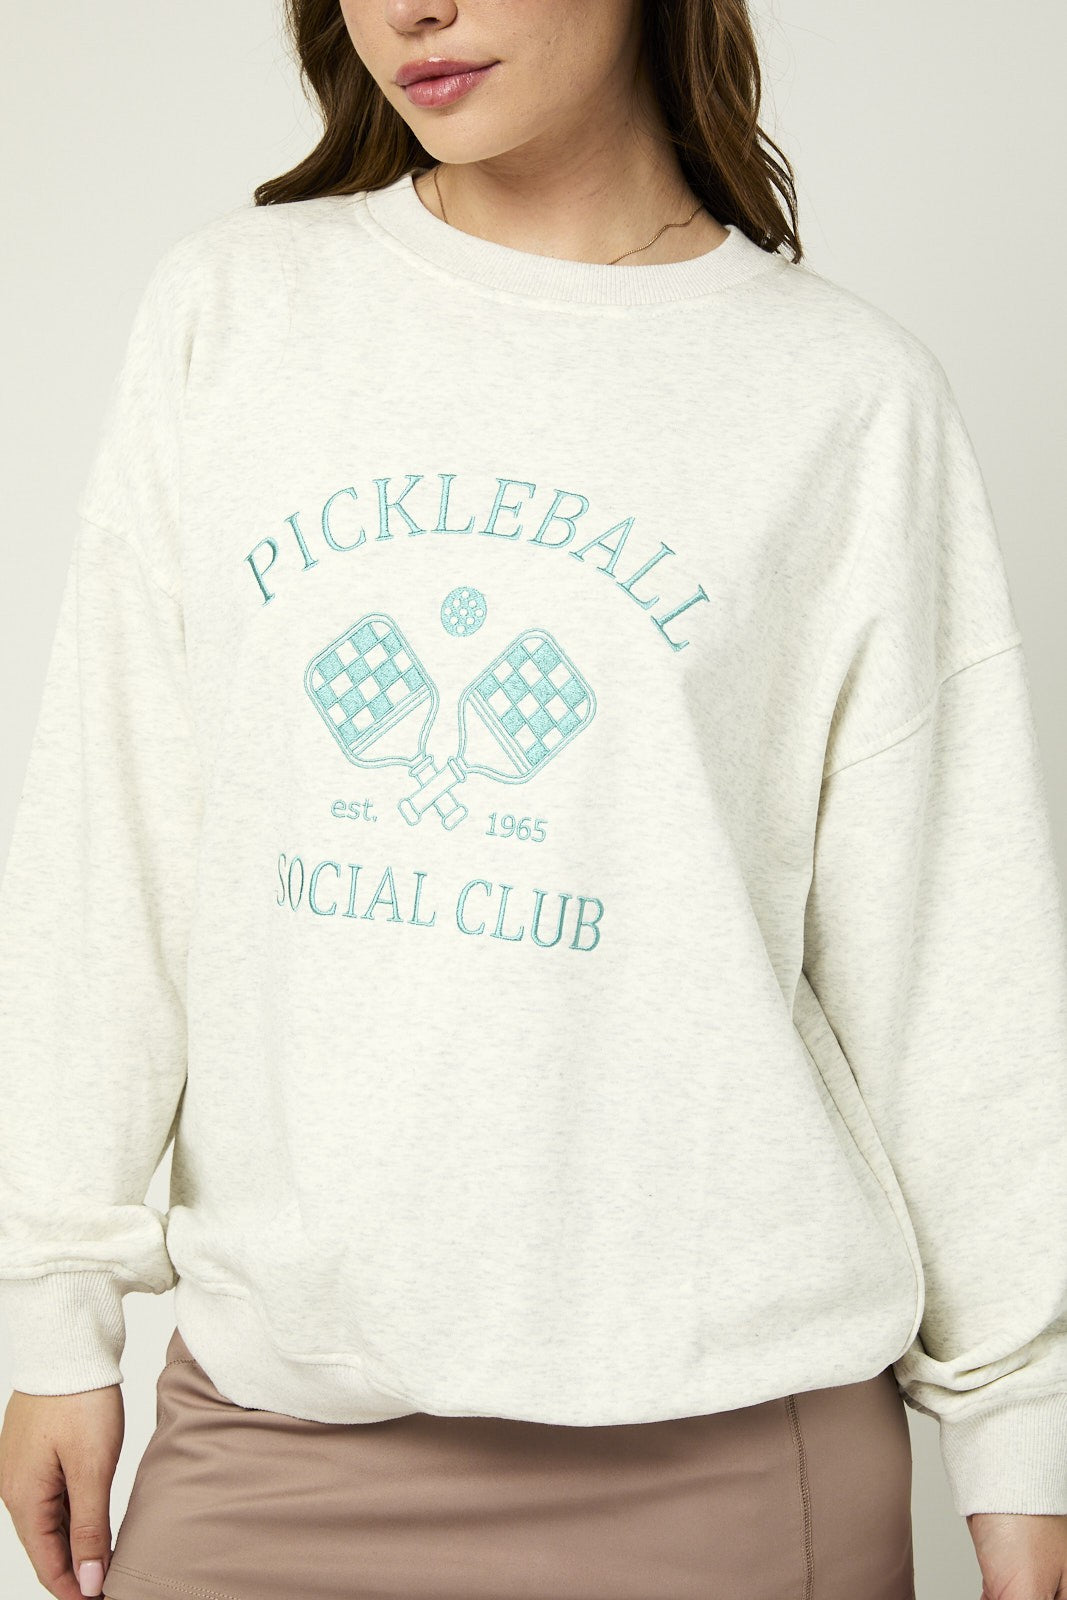 Pickleball Social Club Crewneck Sweatshirt Pullover - Gray Blue